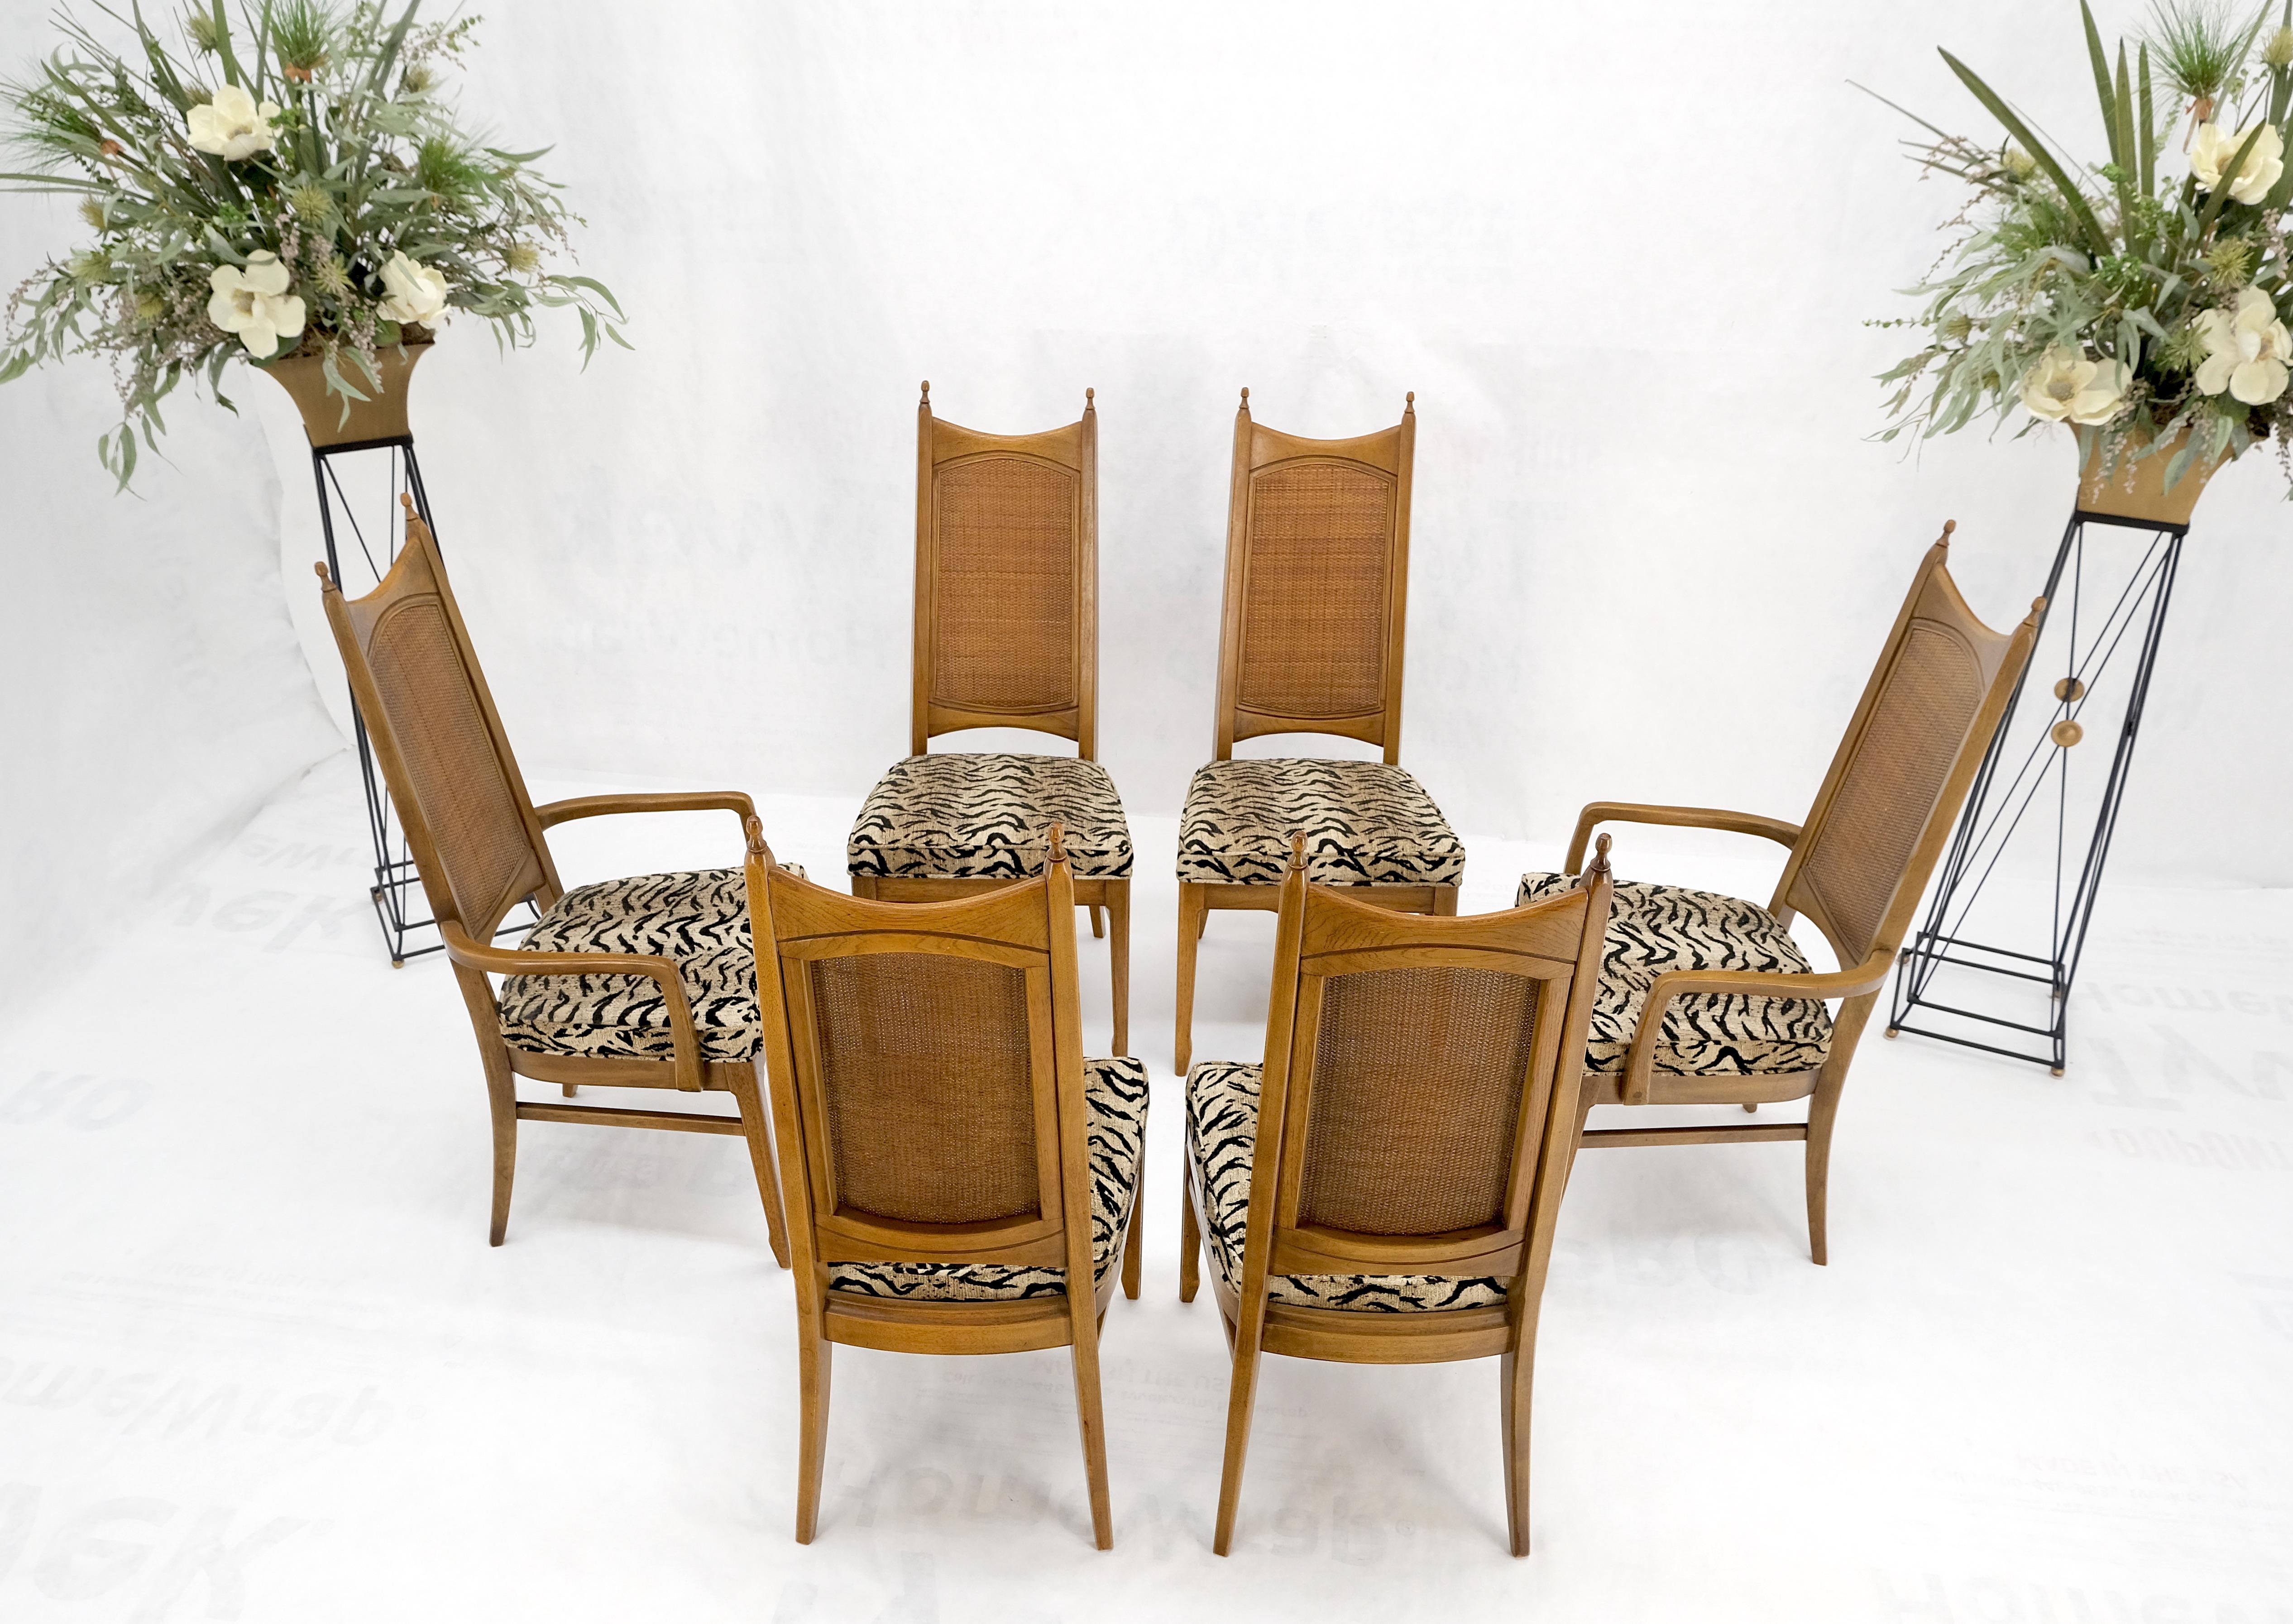 Set of 6 cane tall back pecan Mid-Century Modern chairs mint!
Natural organic Safari pattern upholstery.